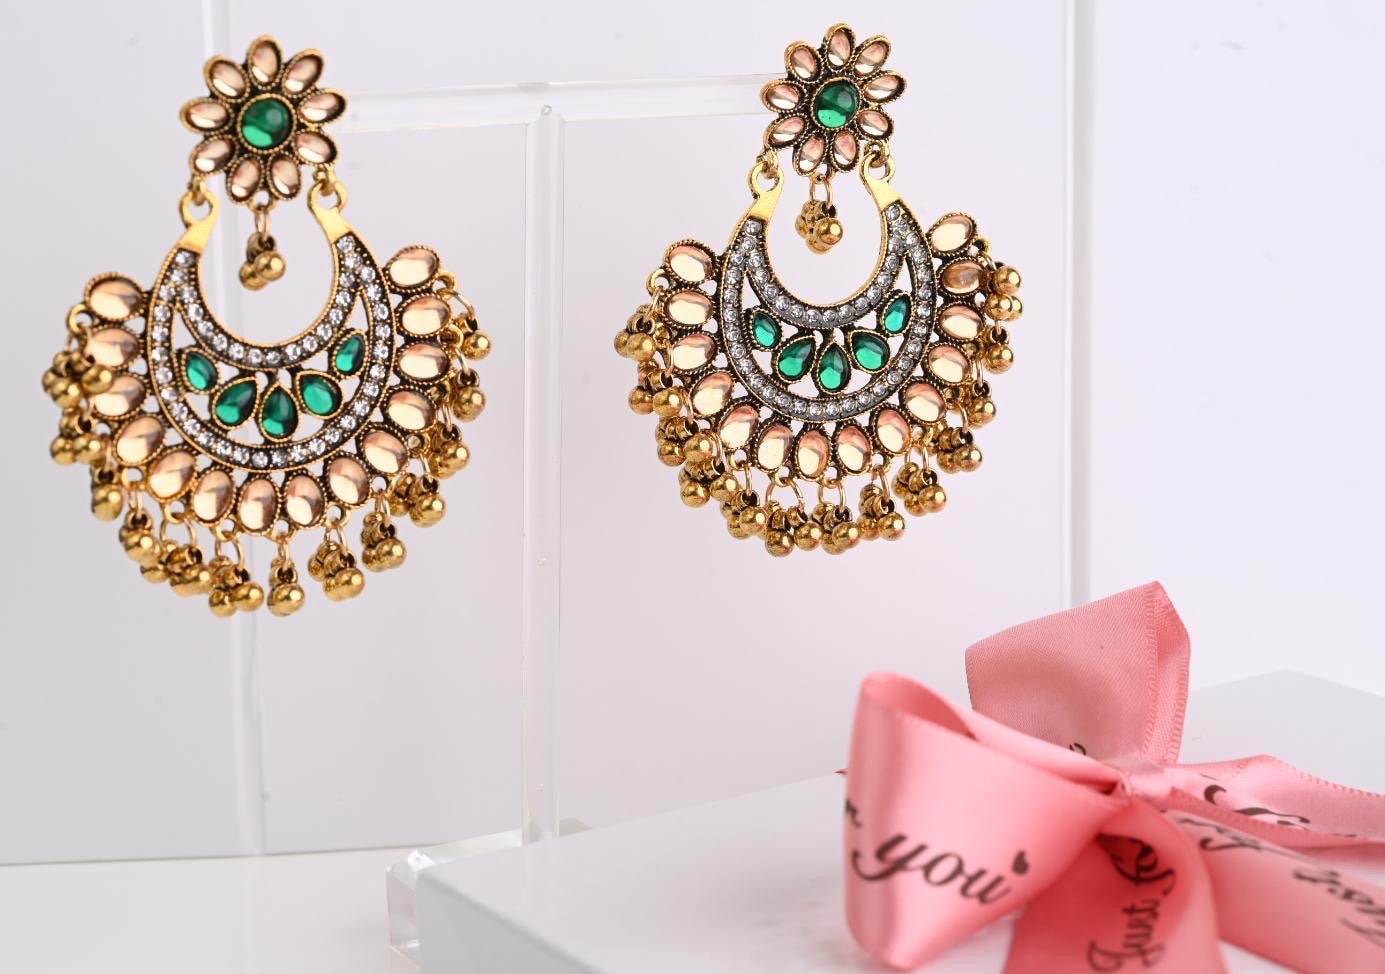 Antique Chaandbali, Indian Earrings, Pakistani Earrings, Jhumka, Desi Earrings, Polki Kundan style Boho Gypsy Earrings, Indian jewellery